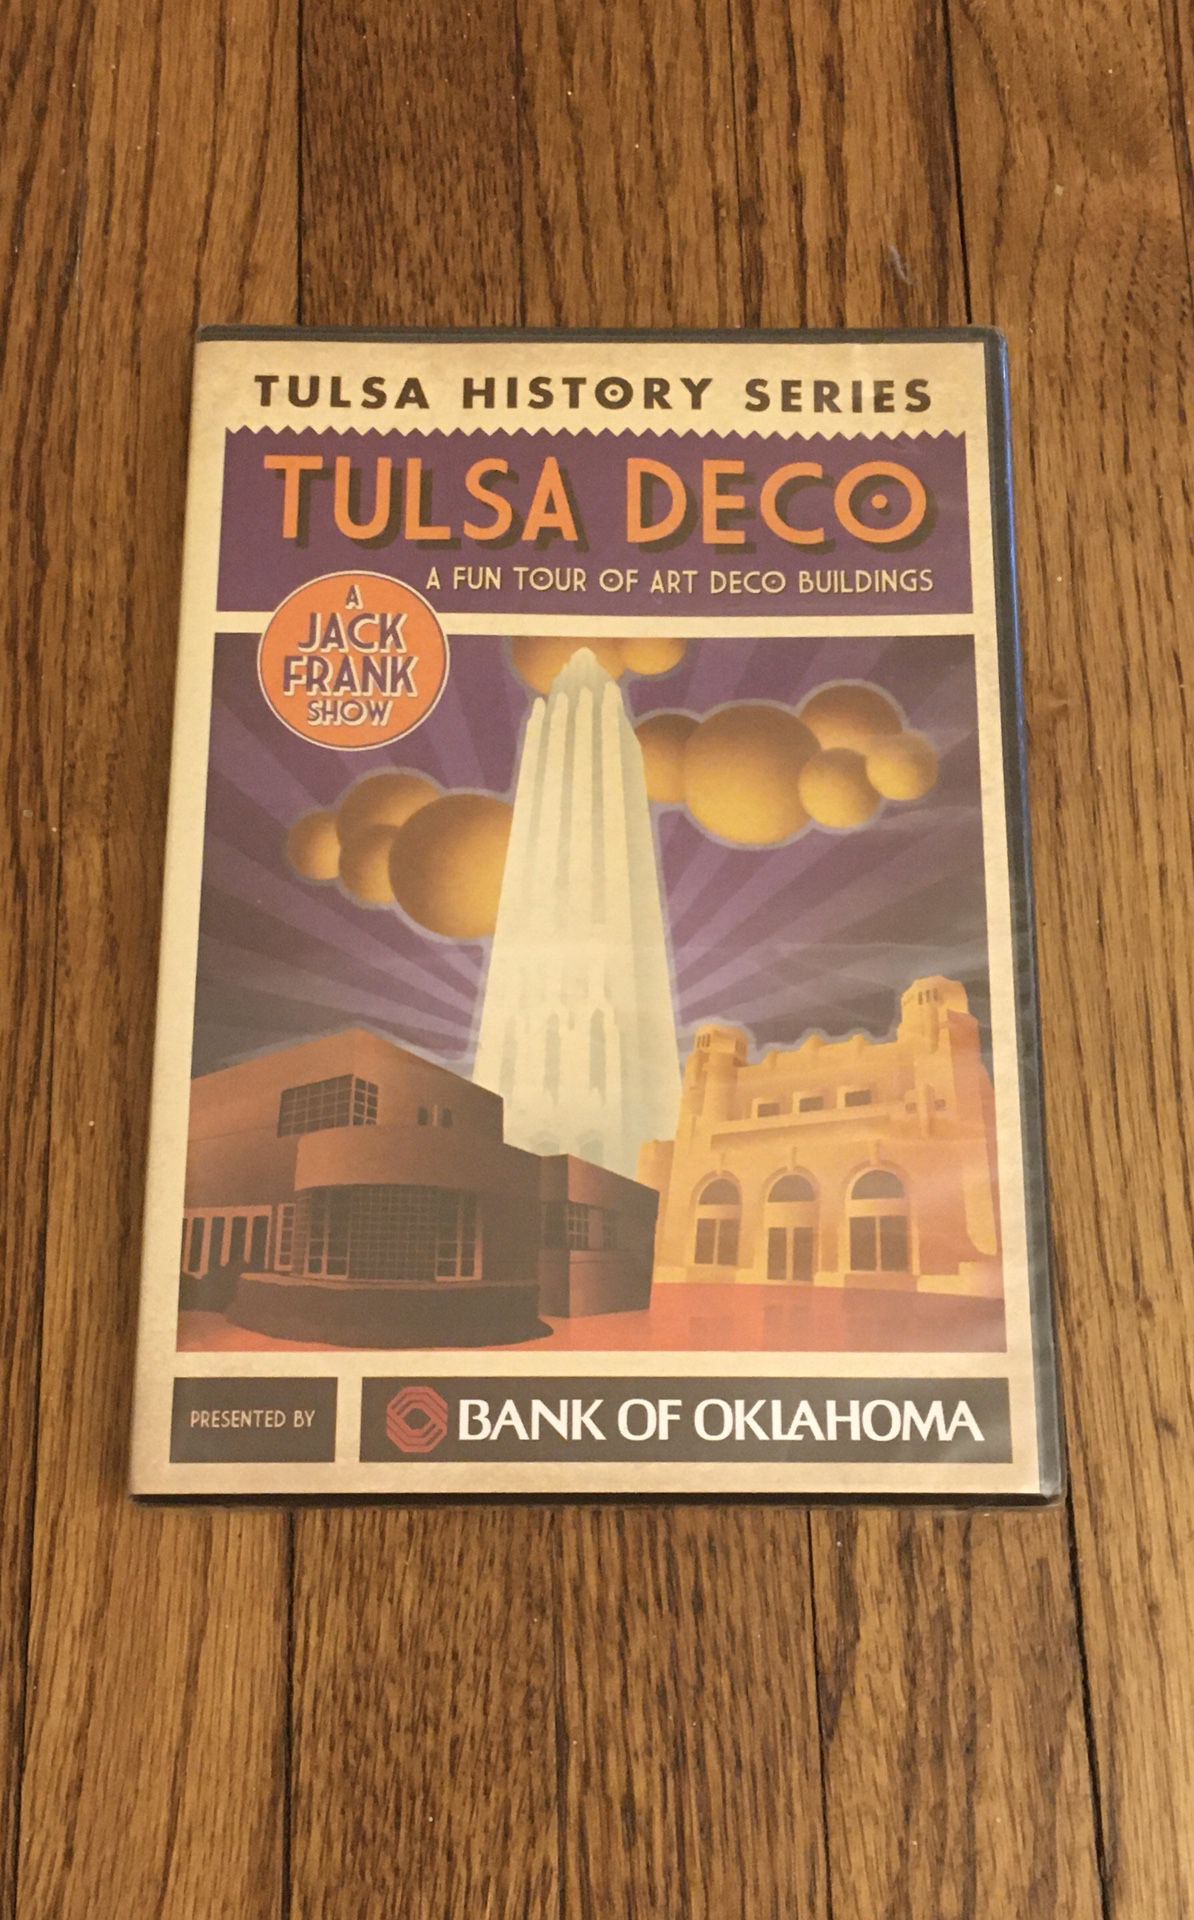 Tulsa Deco: A Fun Tour of Art Deco Buildings Documentary